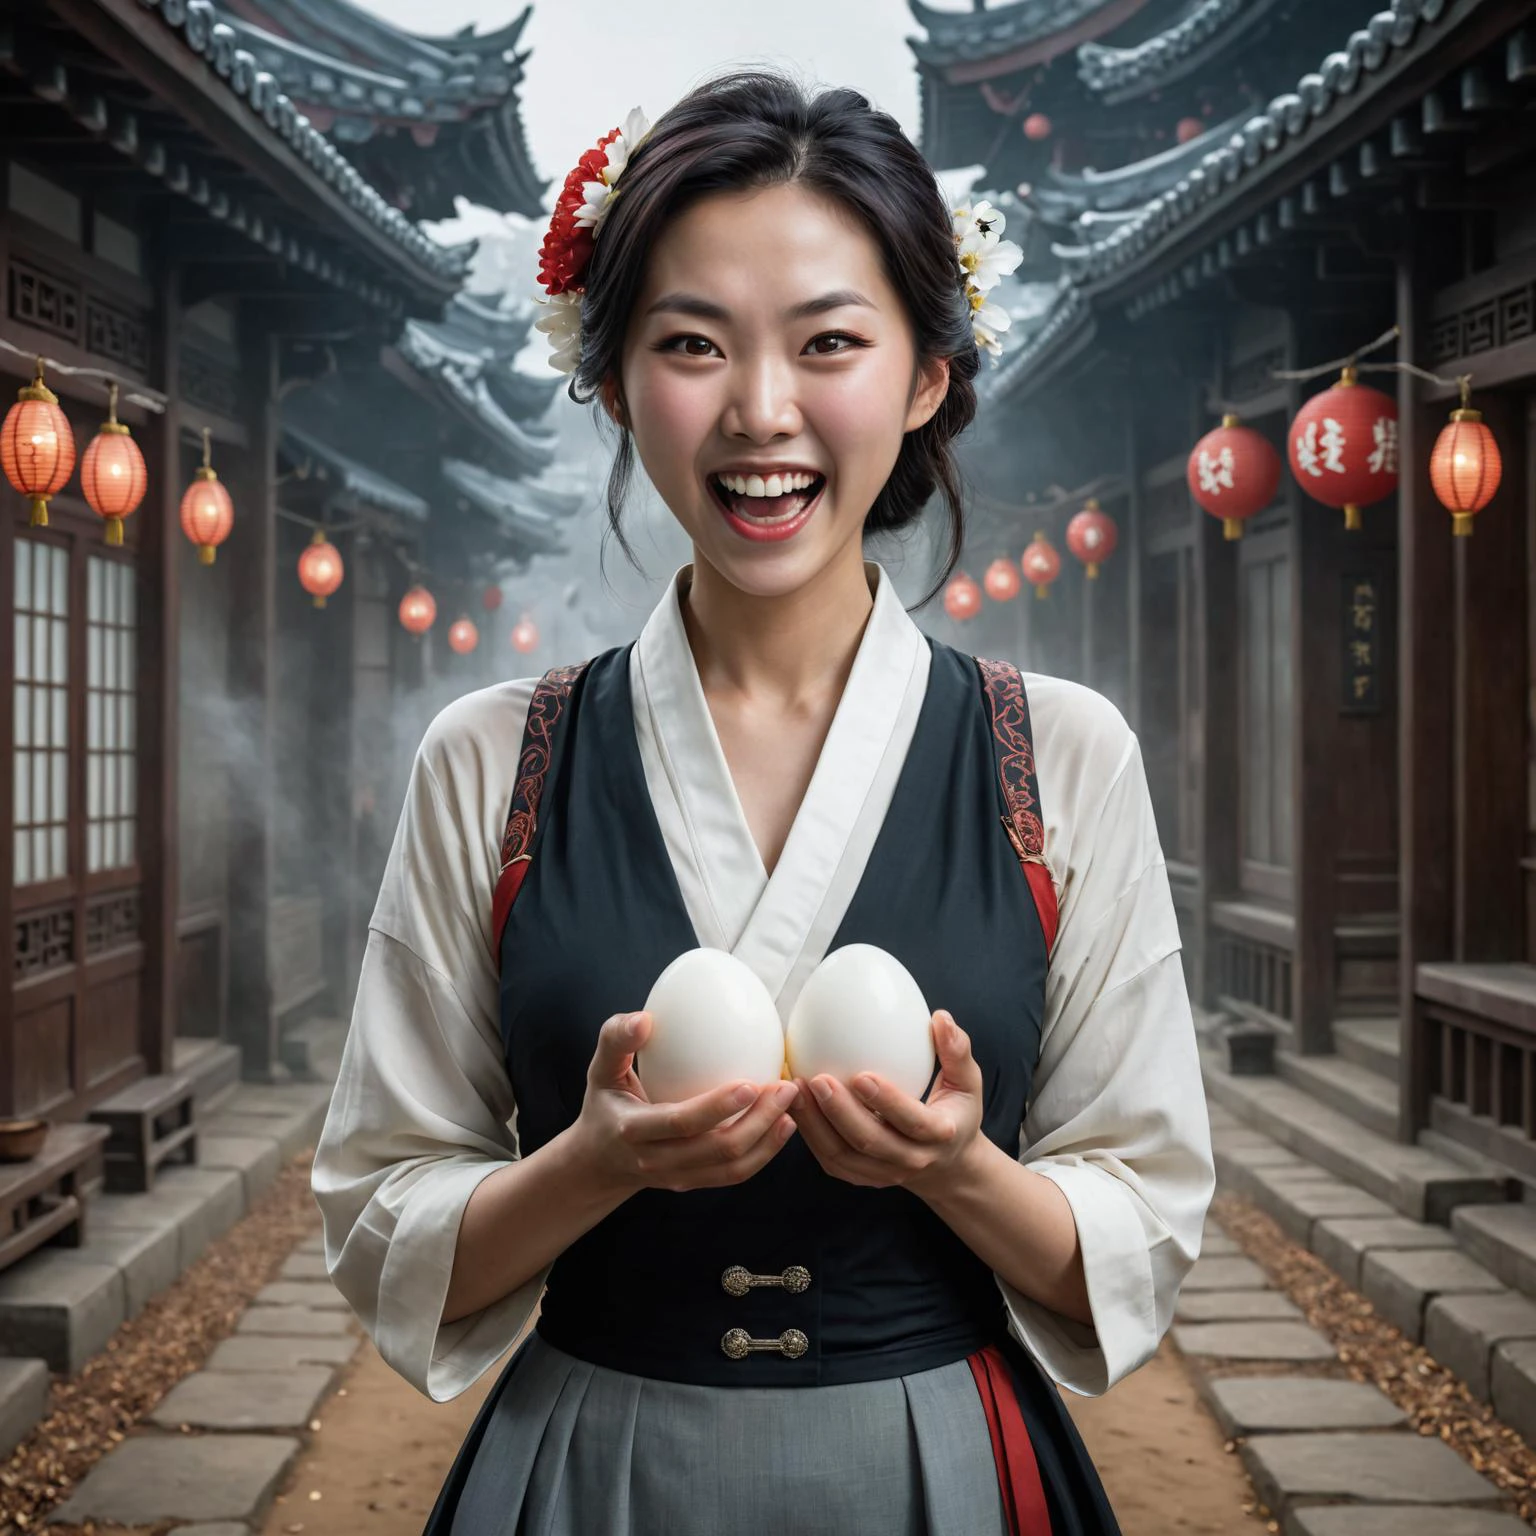 作者：Terry Oakes、Tom Bagshaw 和 Andreas Franke, 可爱的韩国女人双手持两个白色鸡蛋, 狂笑 